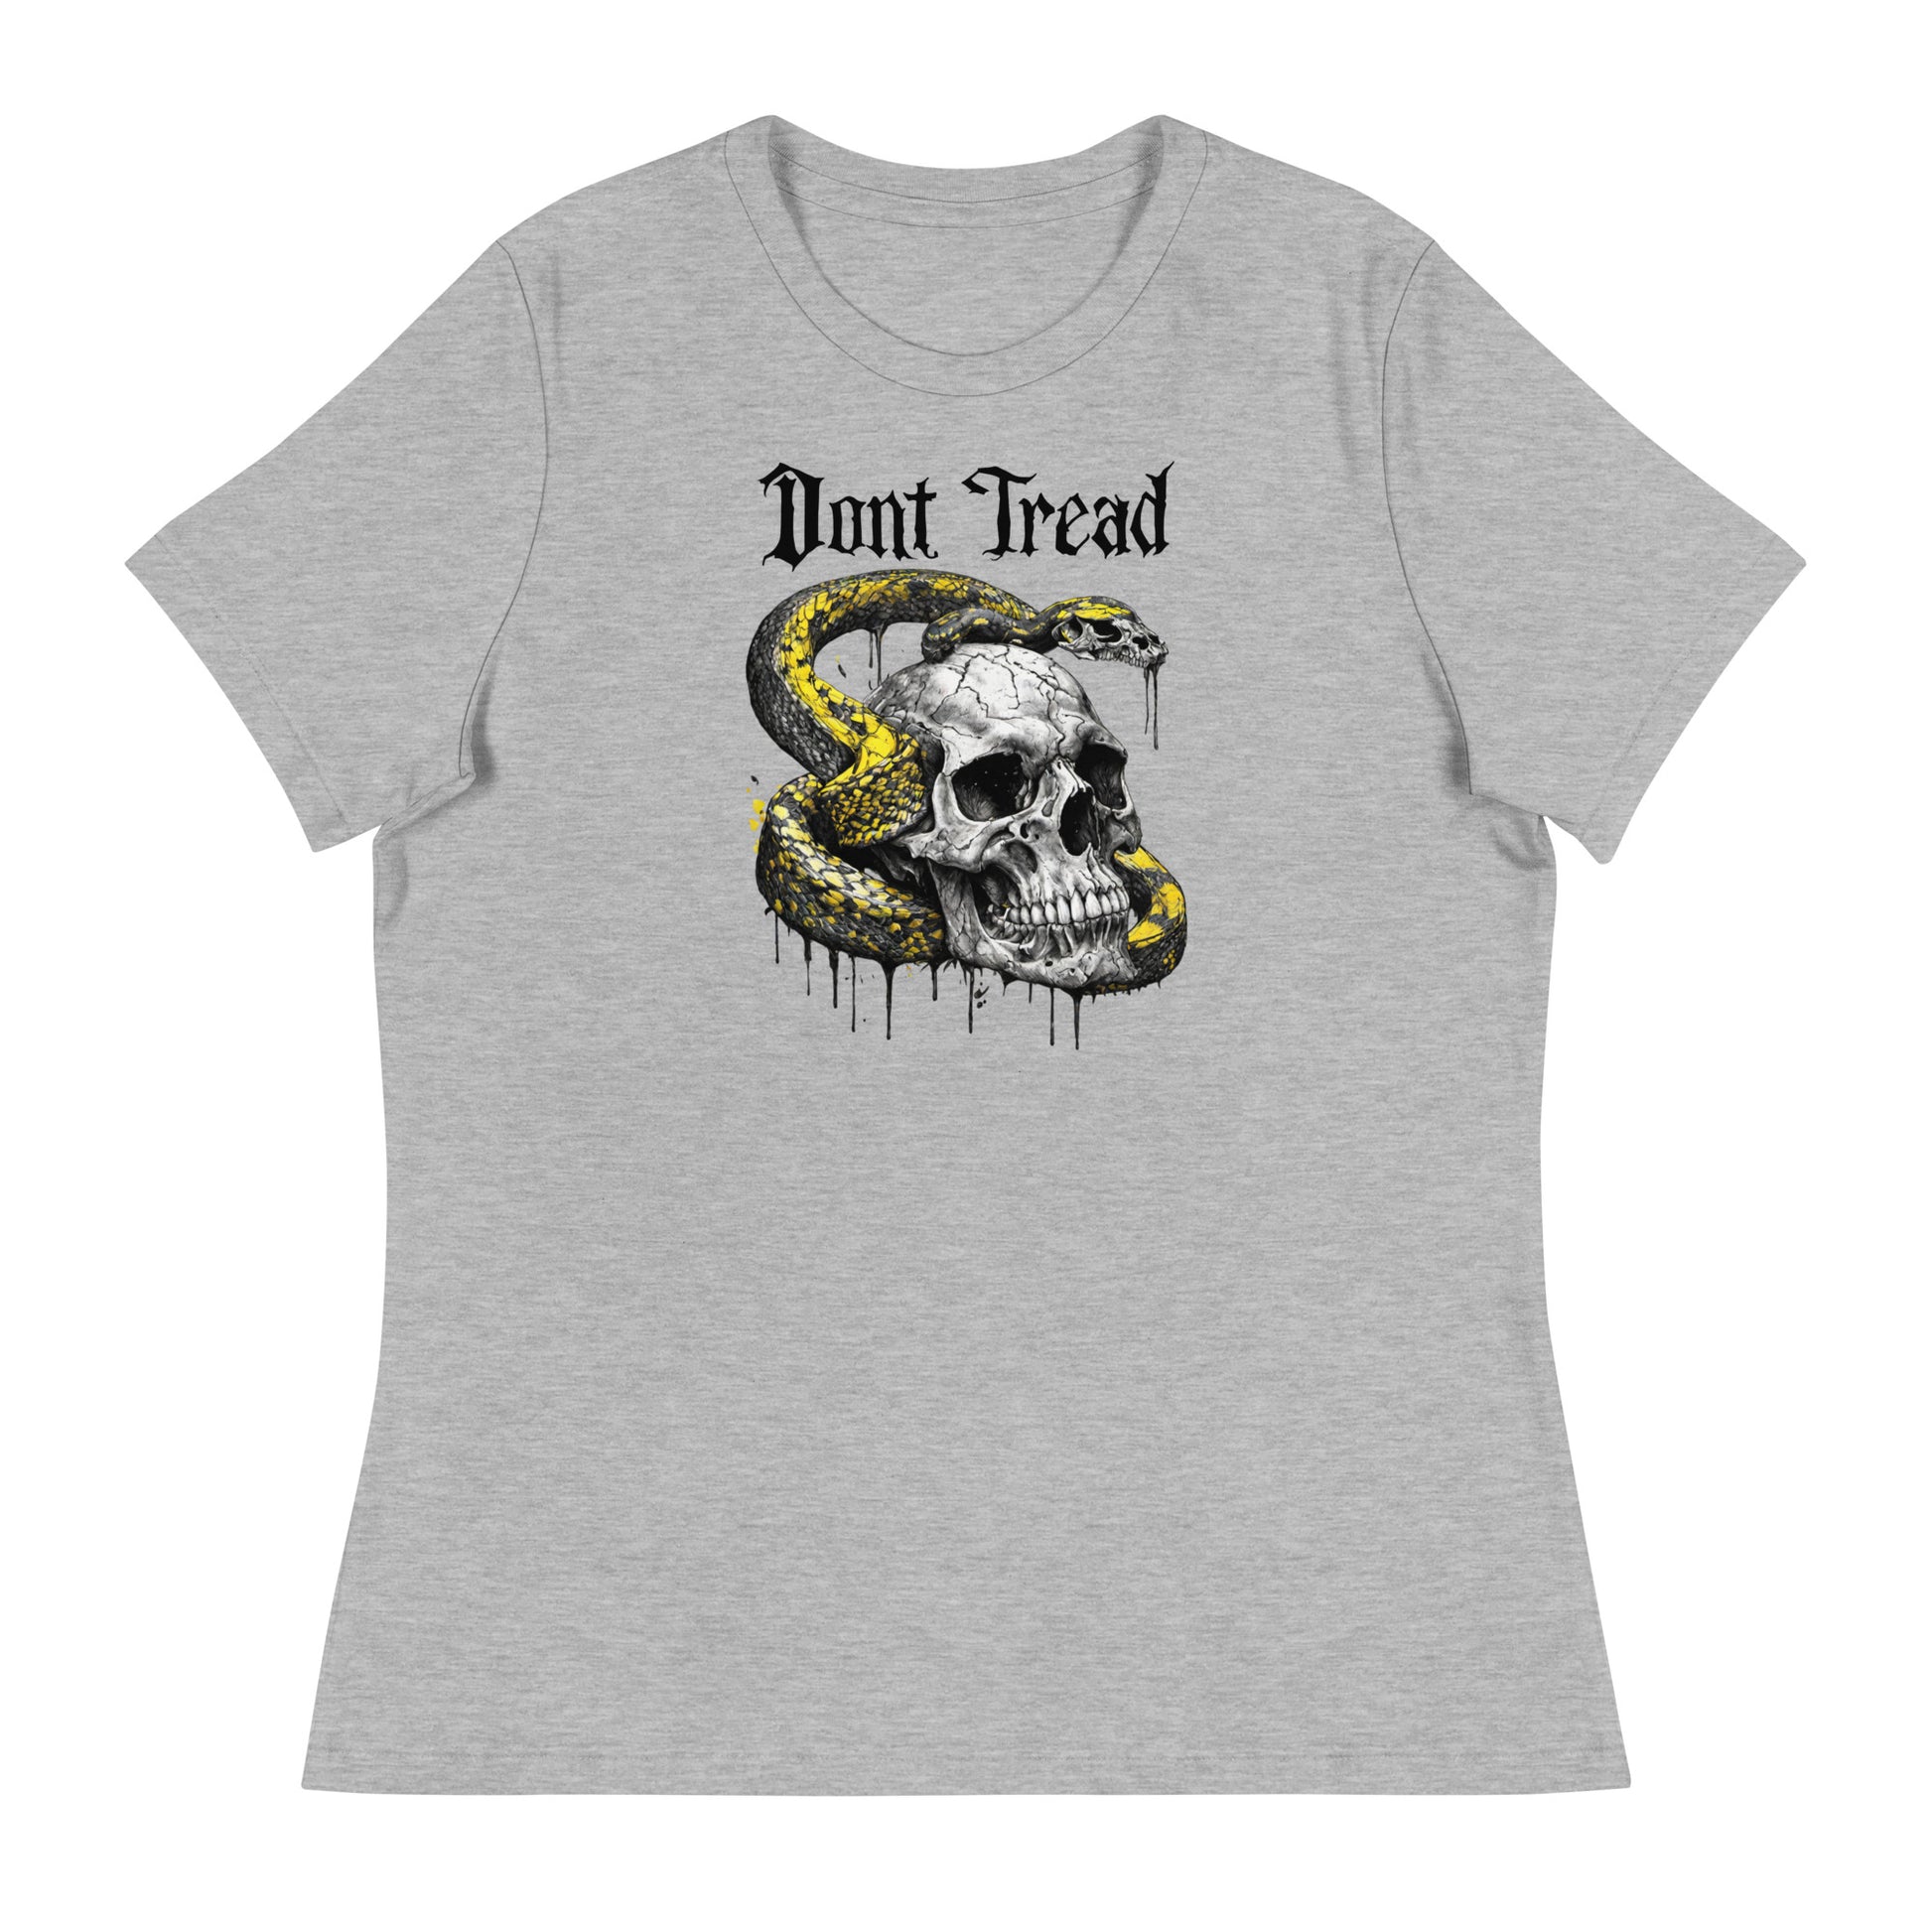 Don't Tread Snake & Skull 2nd Amendment Women's T-Shirt Athletic Heather